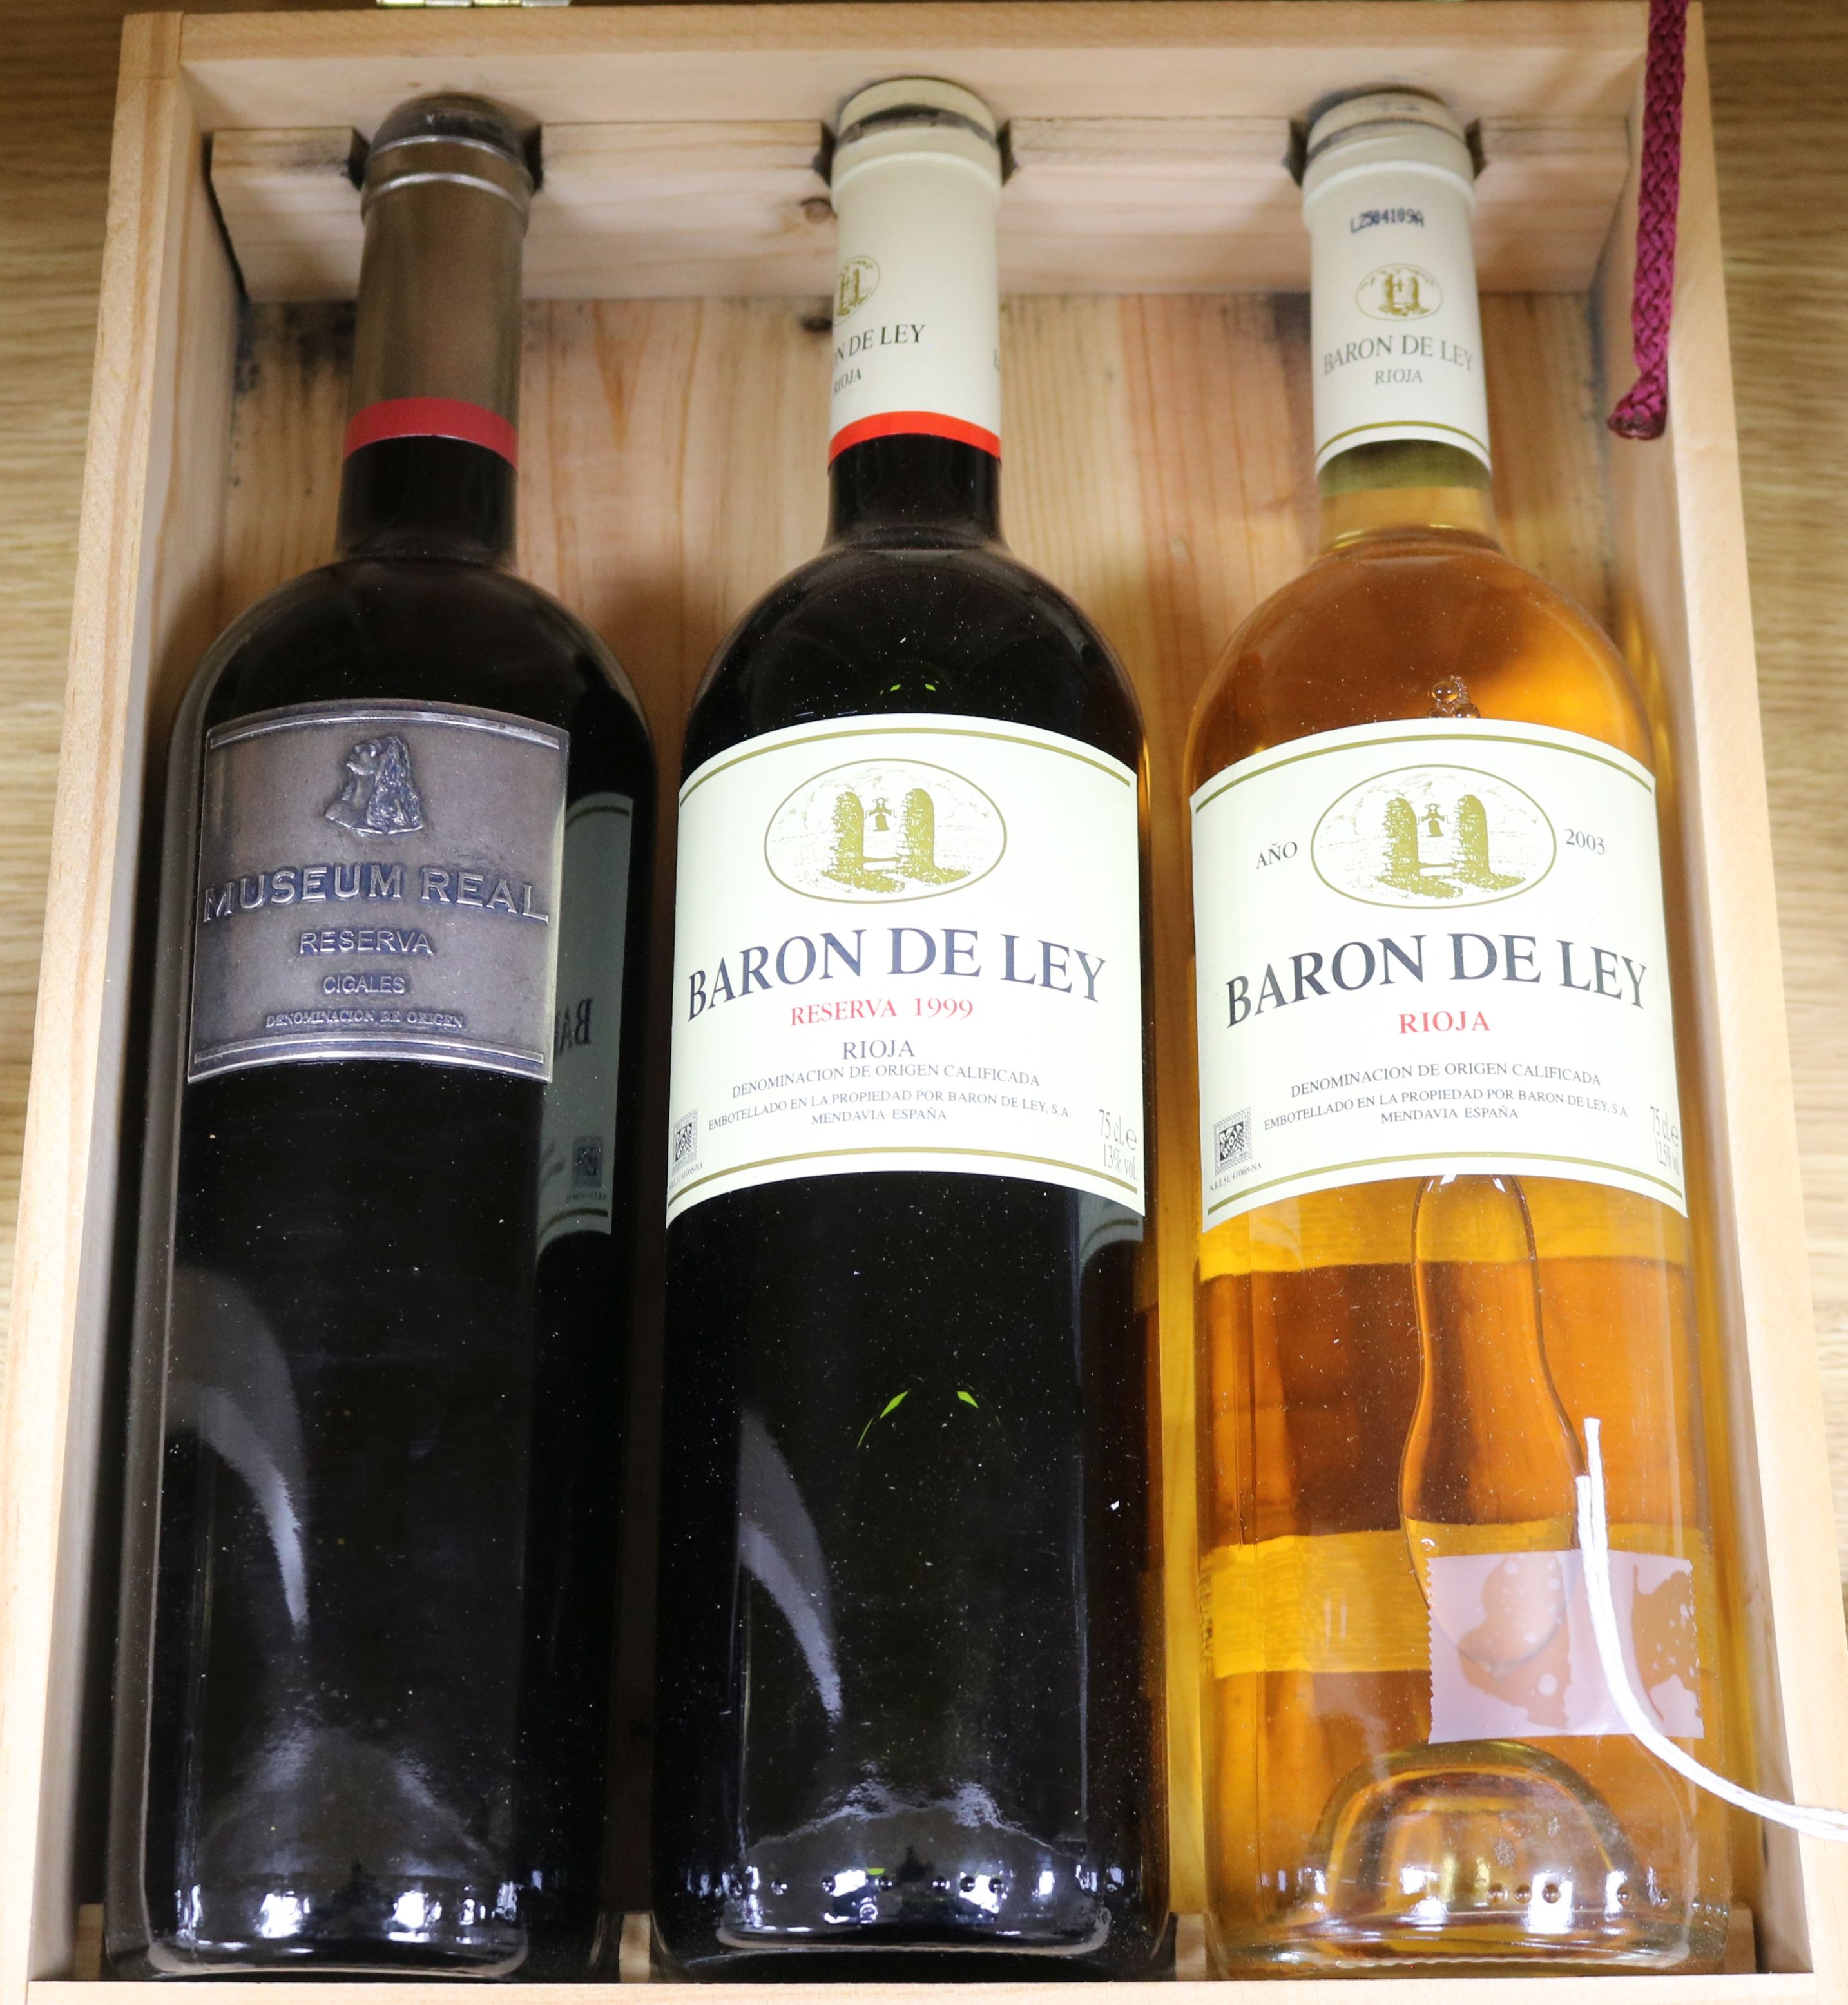 Three bottles of Baron de Ley Rioja in wooden presentation box, including Museum Real Reserva